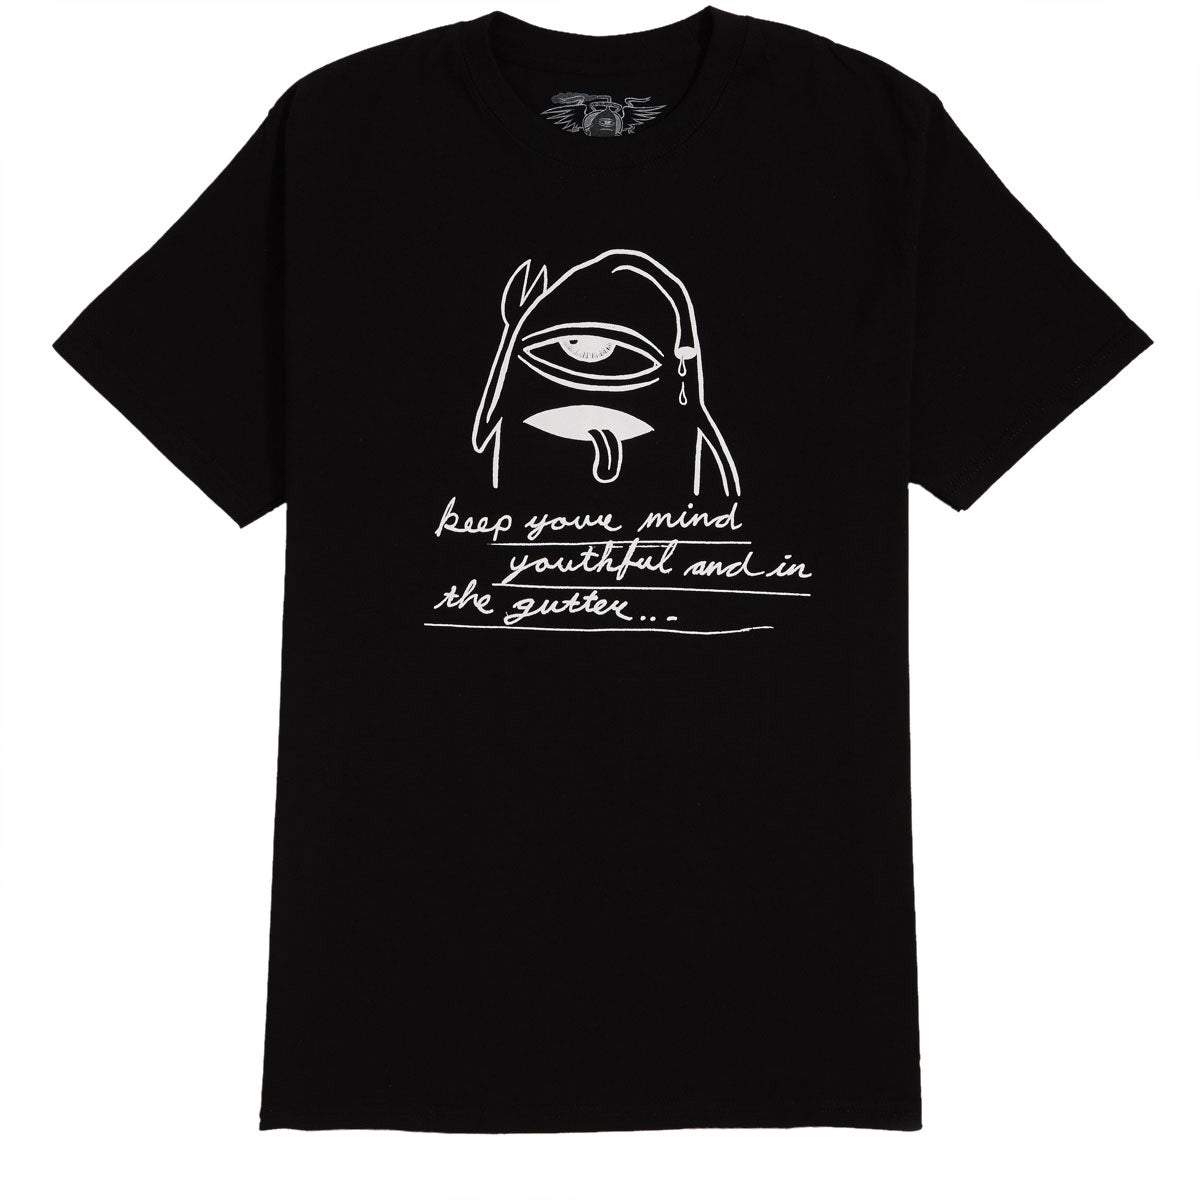 Toy Machine Youthful T-Shirt - Black image 1